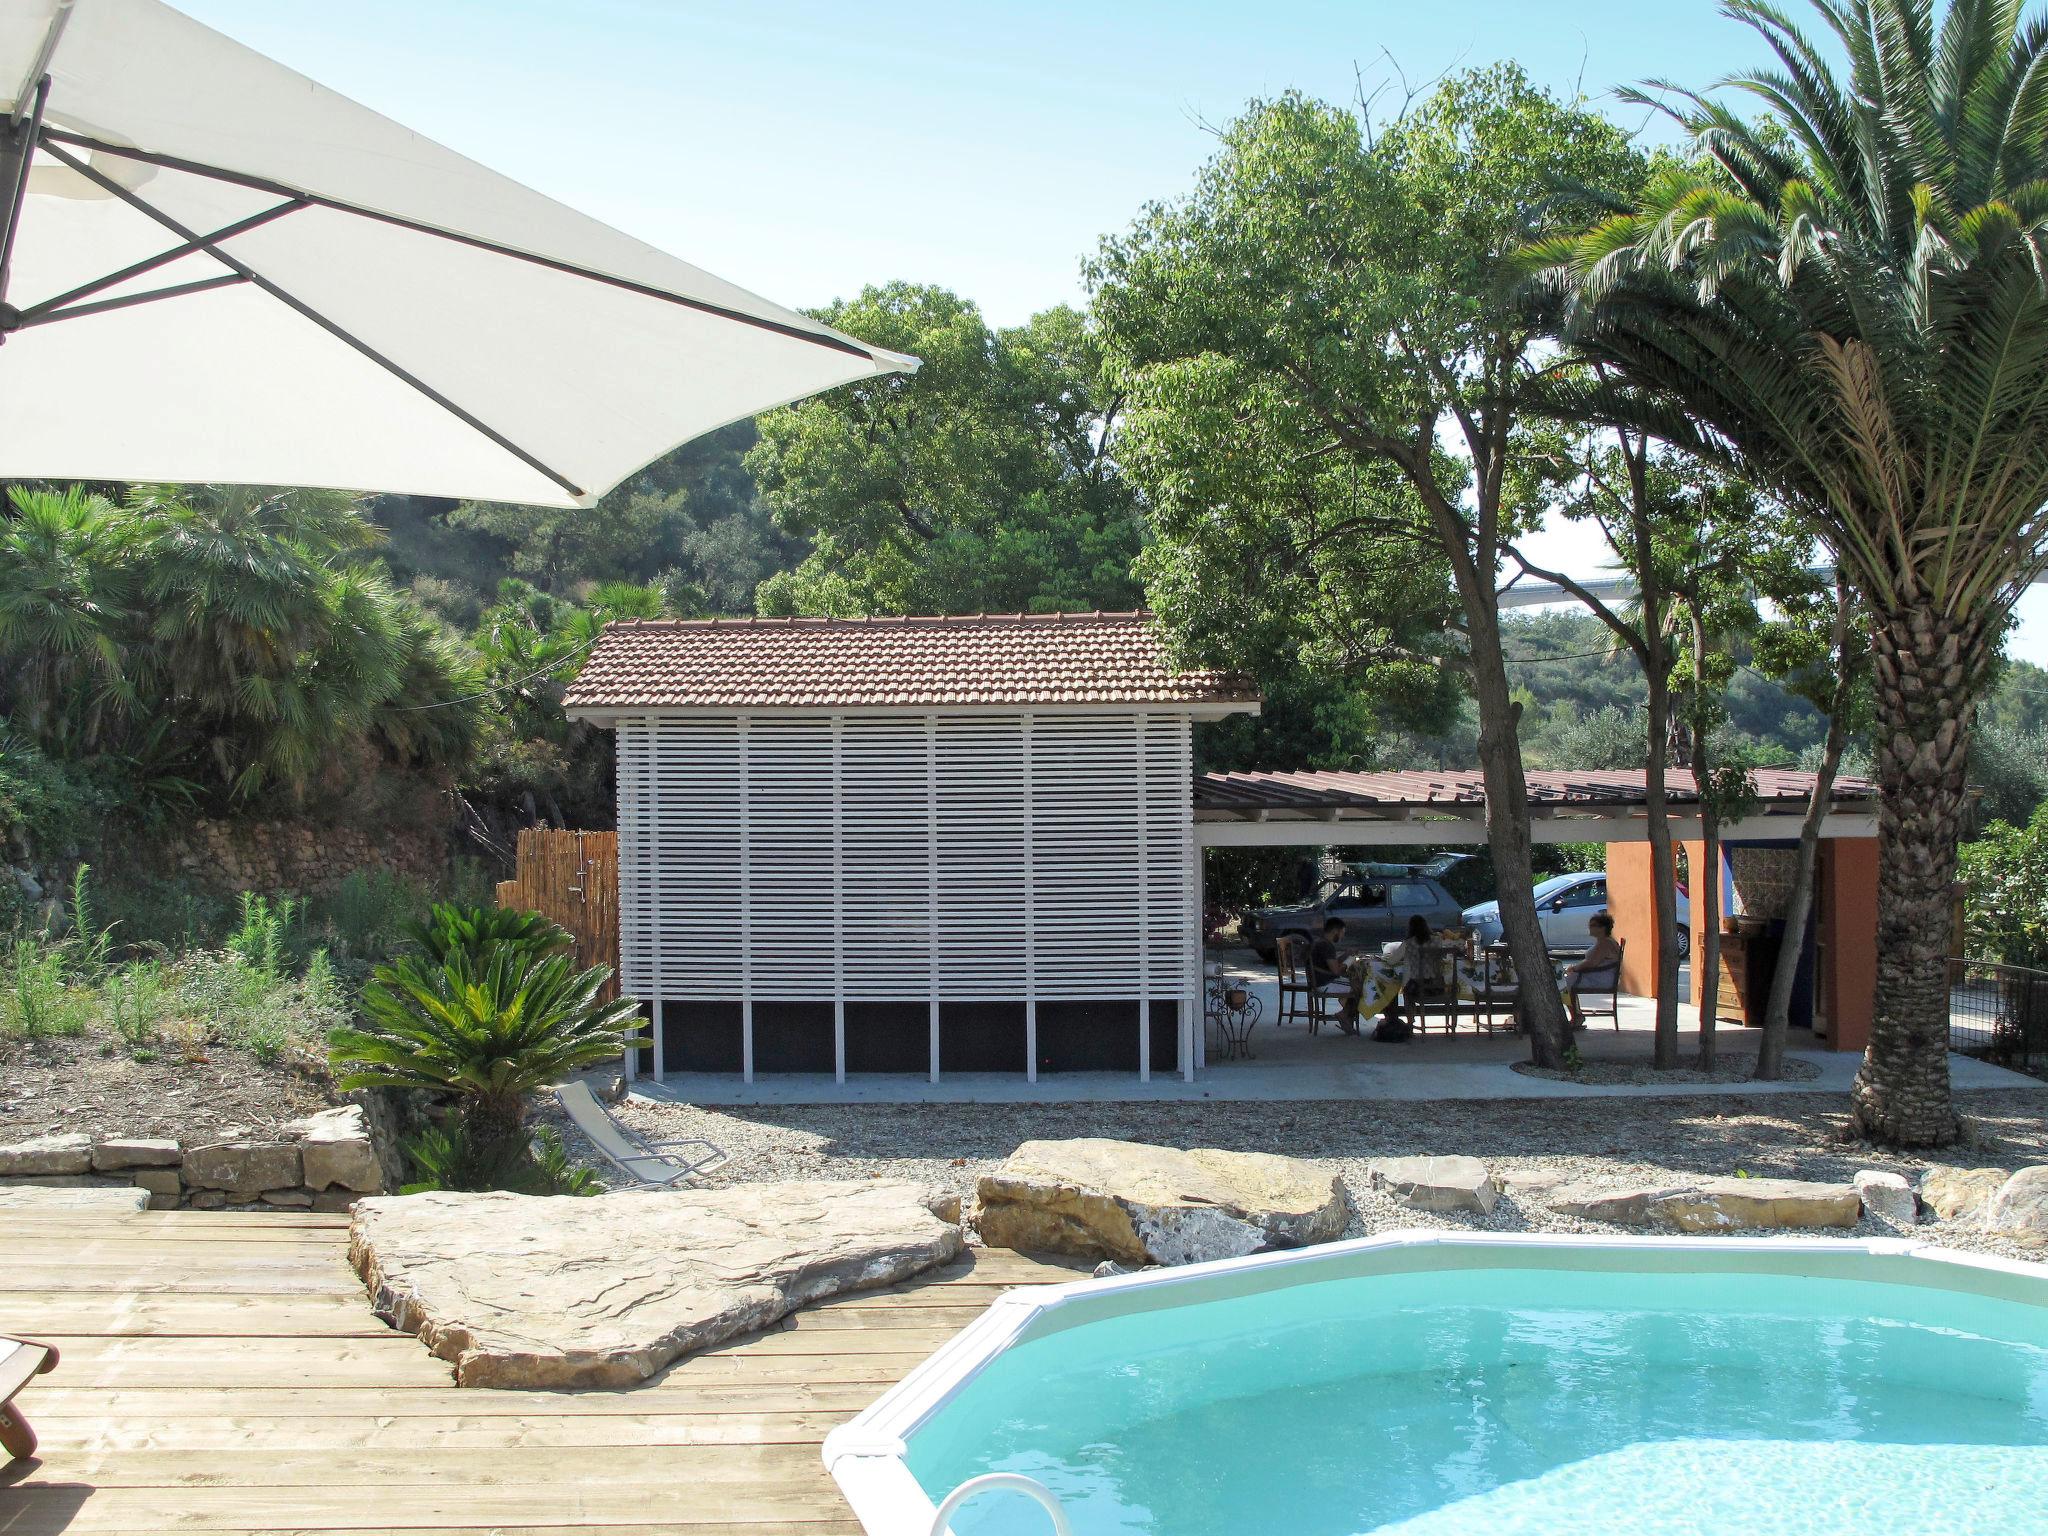 Foto 17 - Haus in Civezza mit privater pool und blick aufs meer